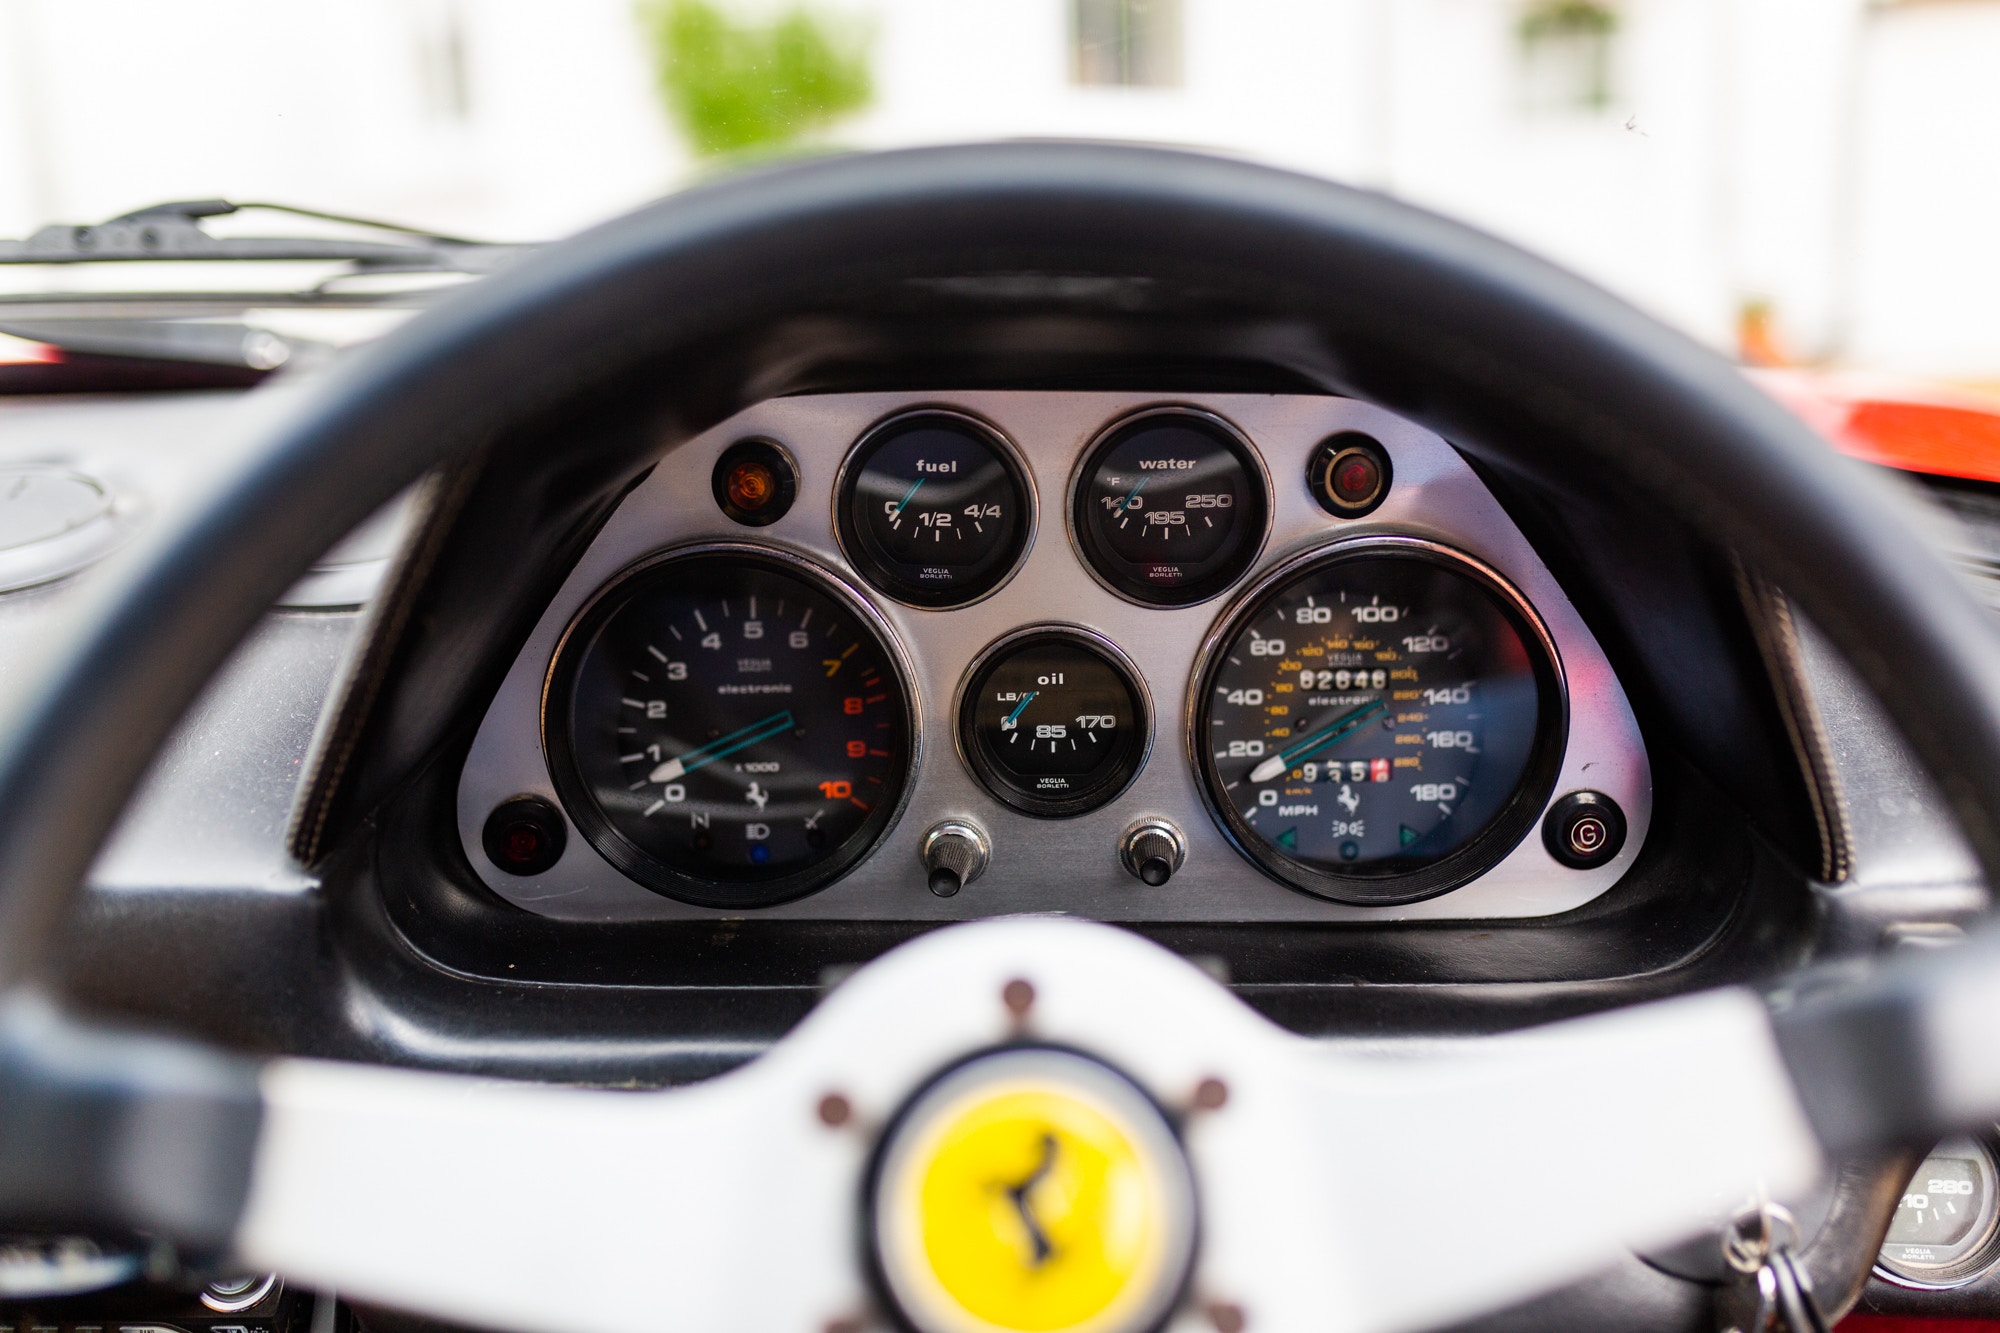 Ferrari 308 steering wheel